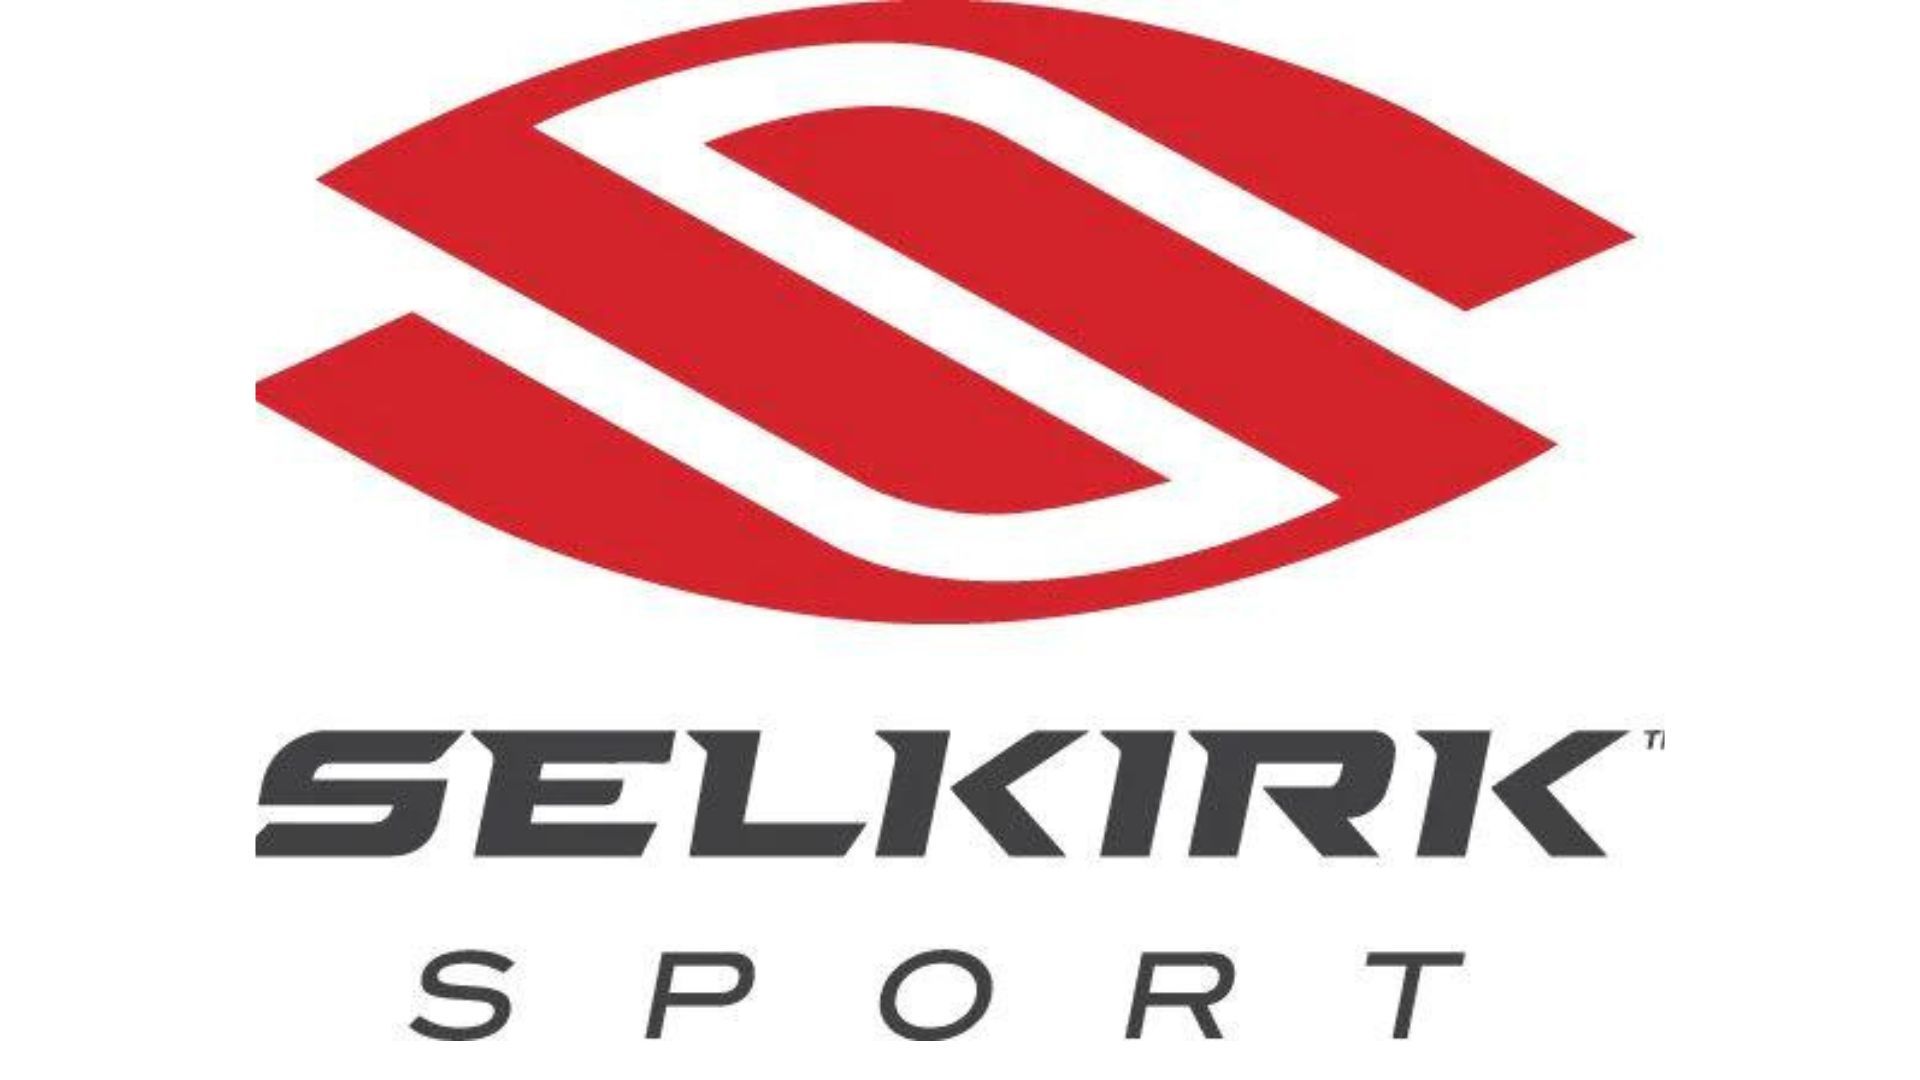 Selkirk logo